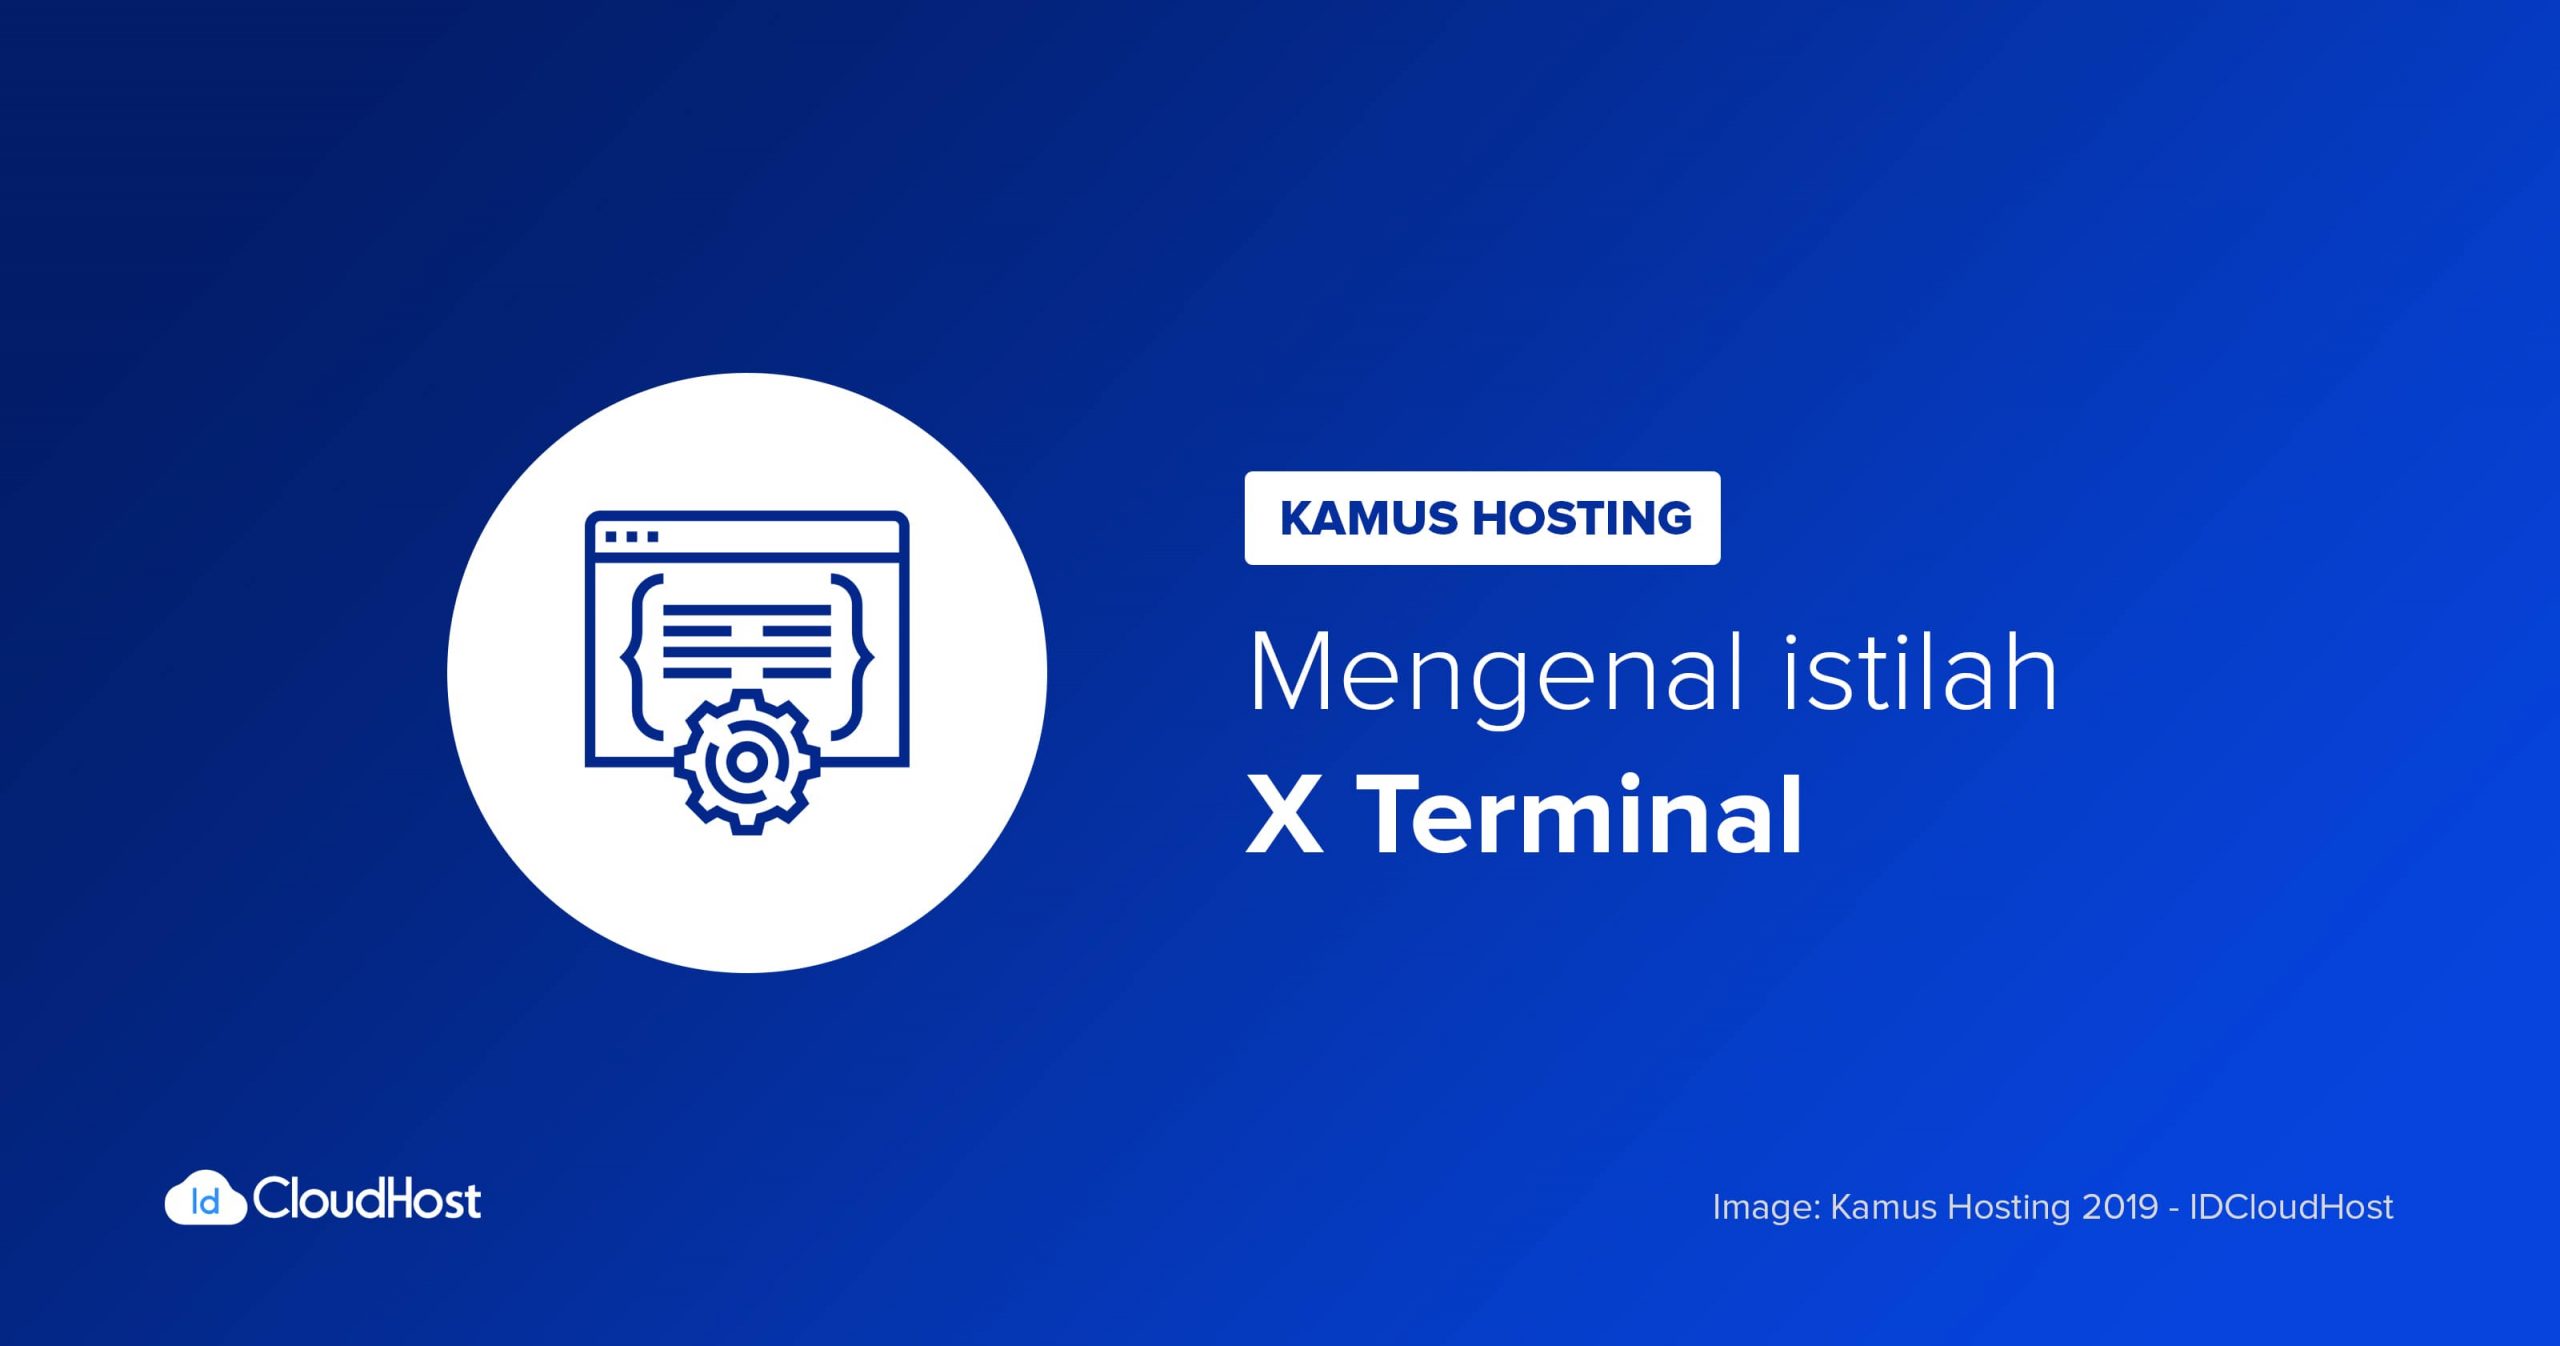 X Terminal